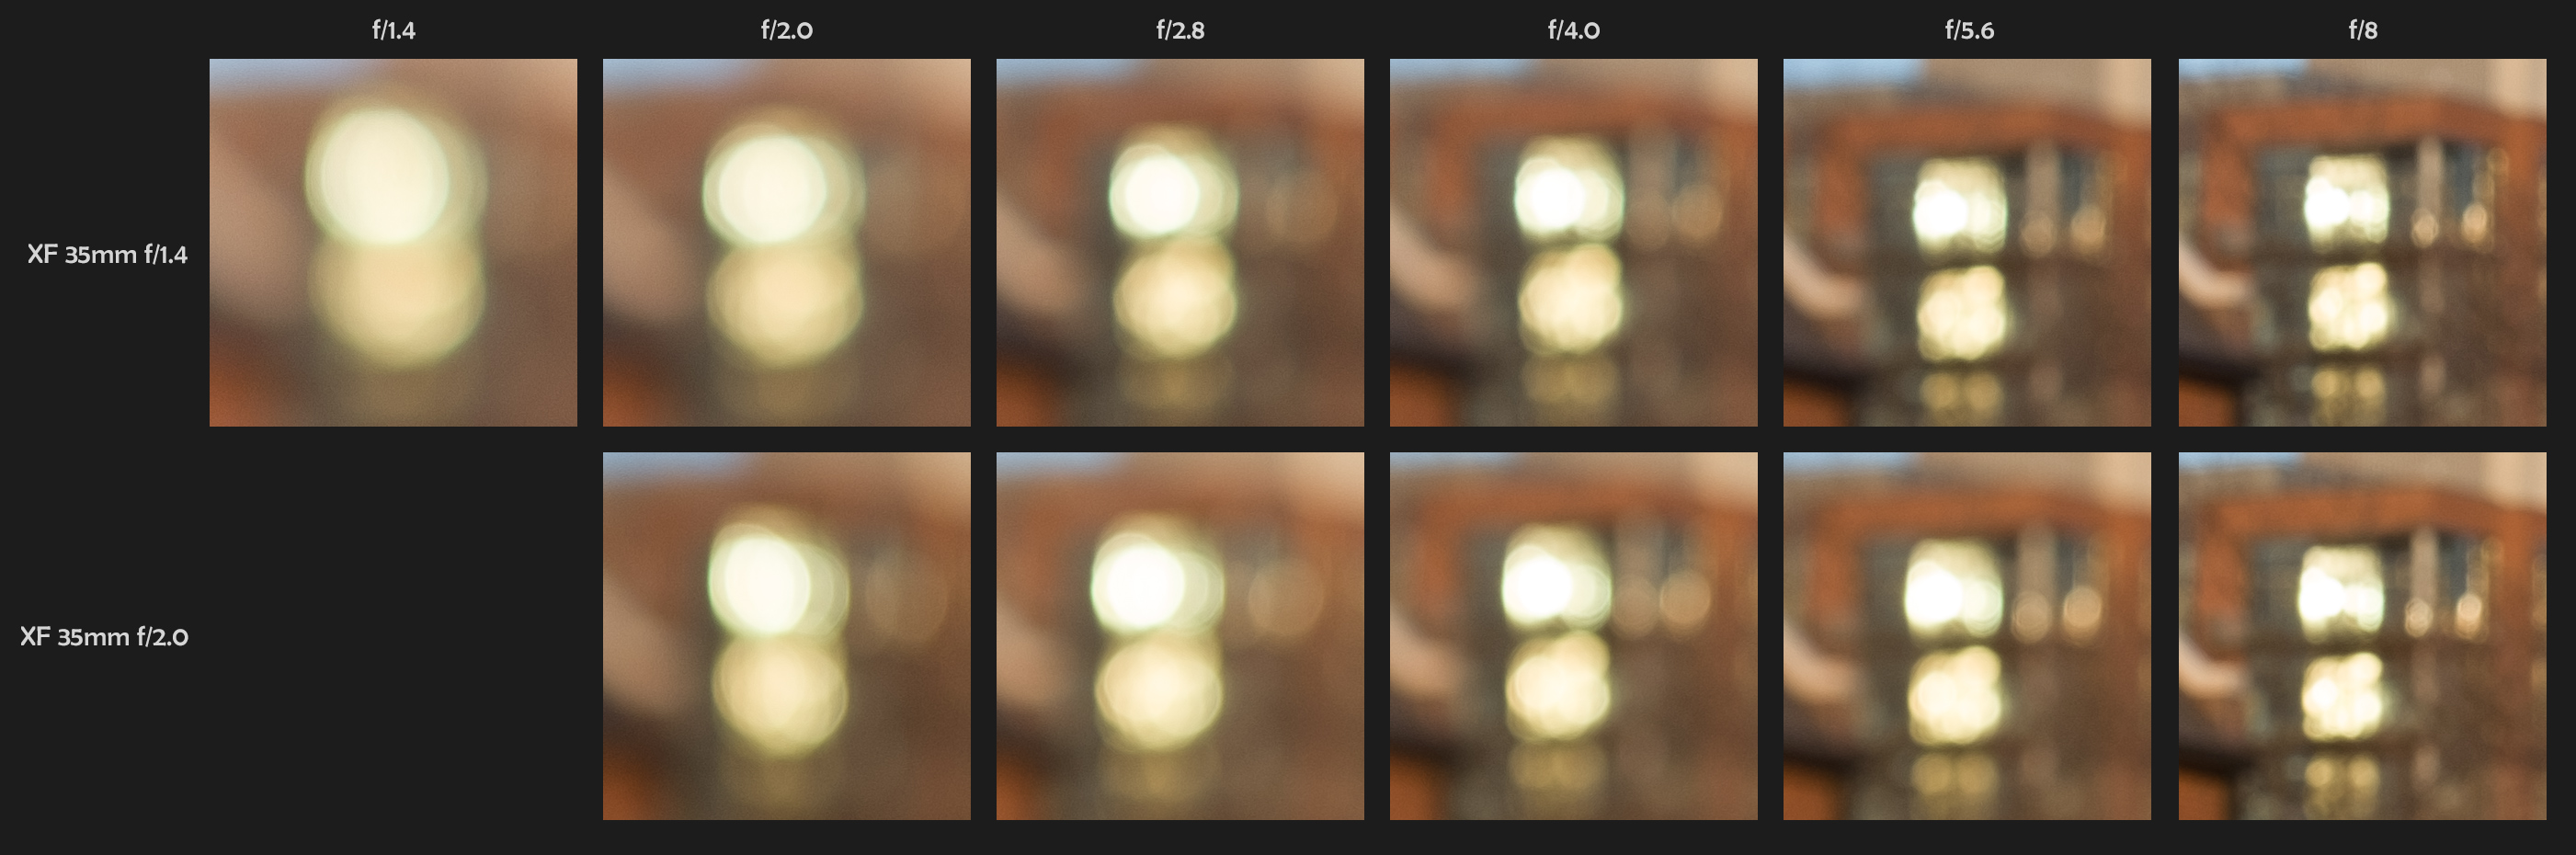 XF 35mm f/1.4 vs. XF 35mm f/2 - Bokeh (Click to Enlarge)